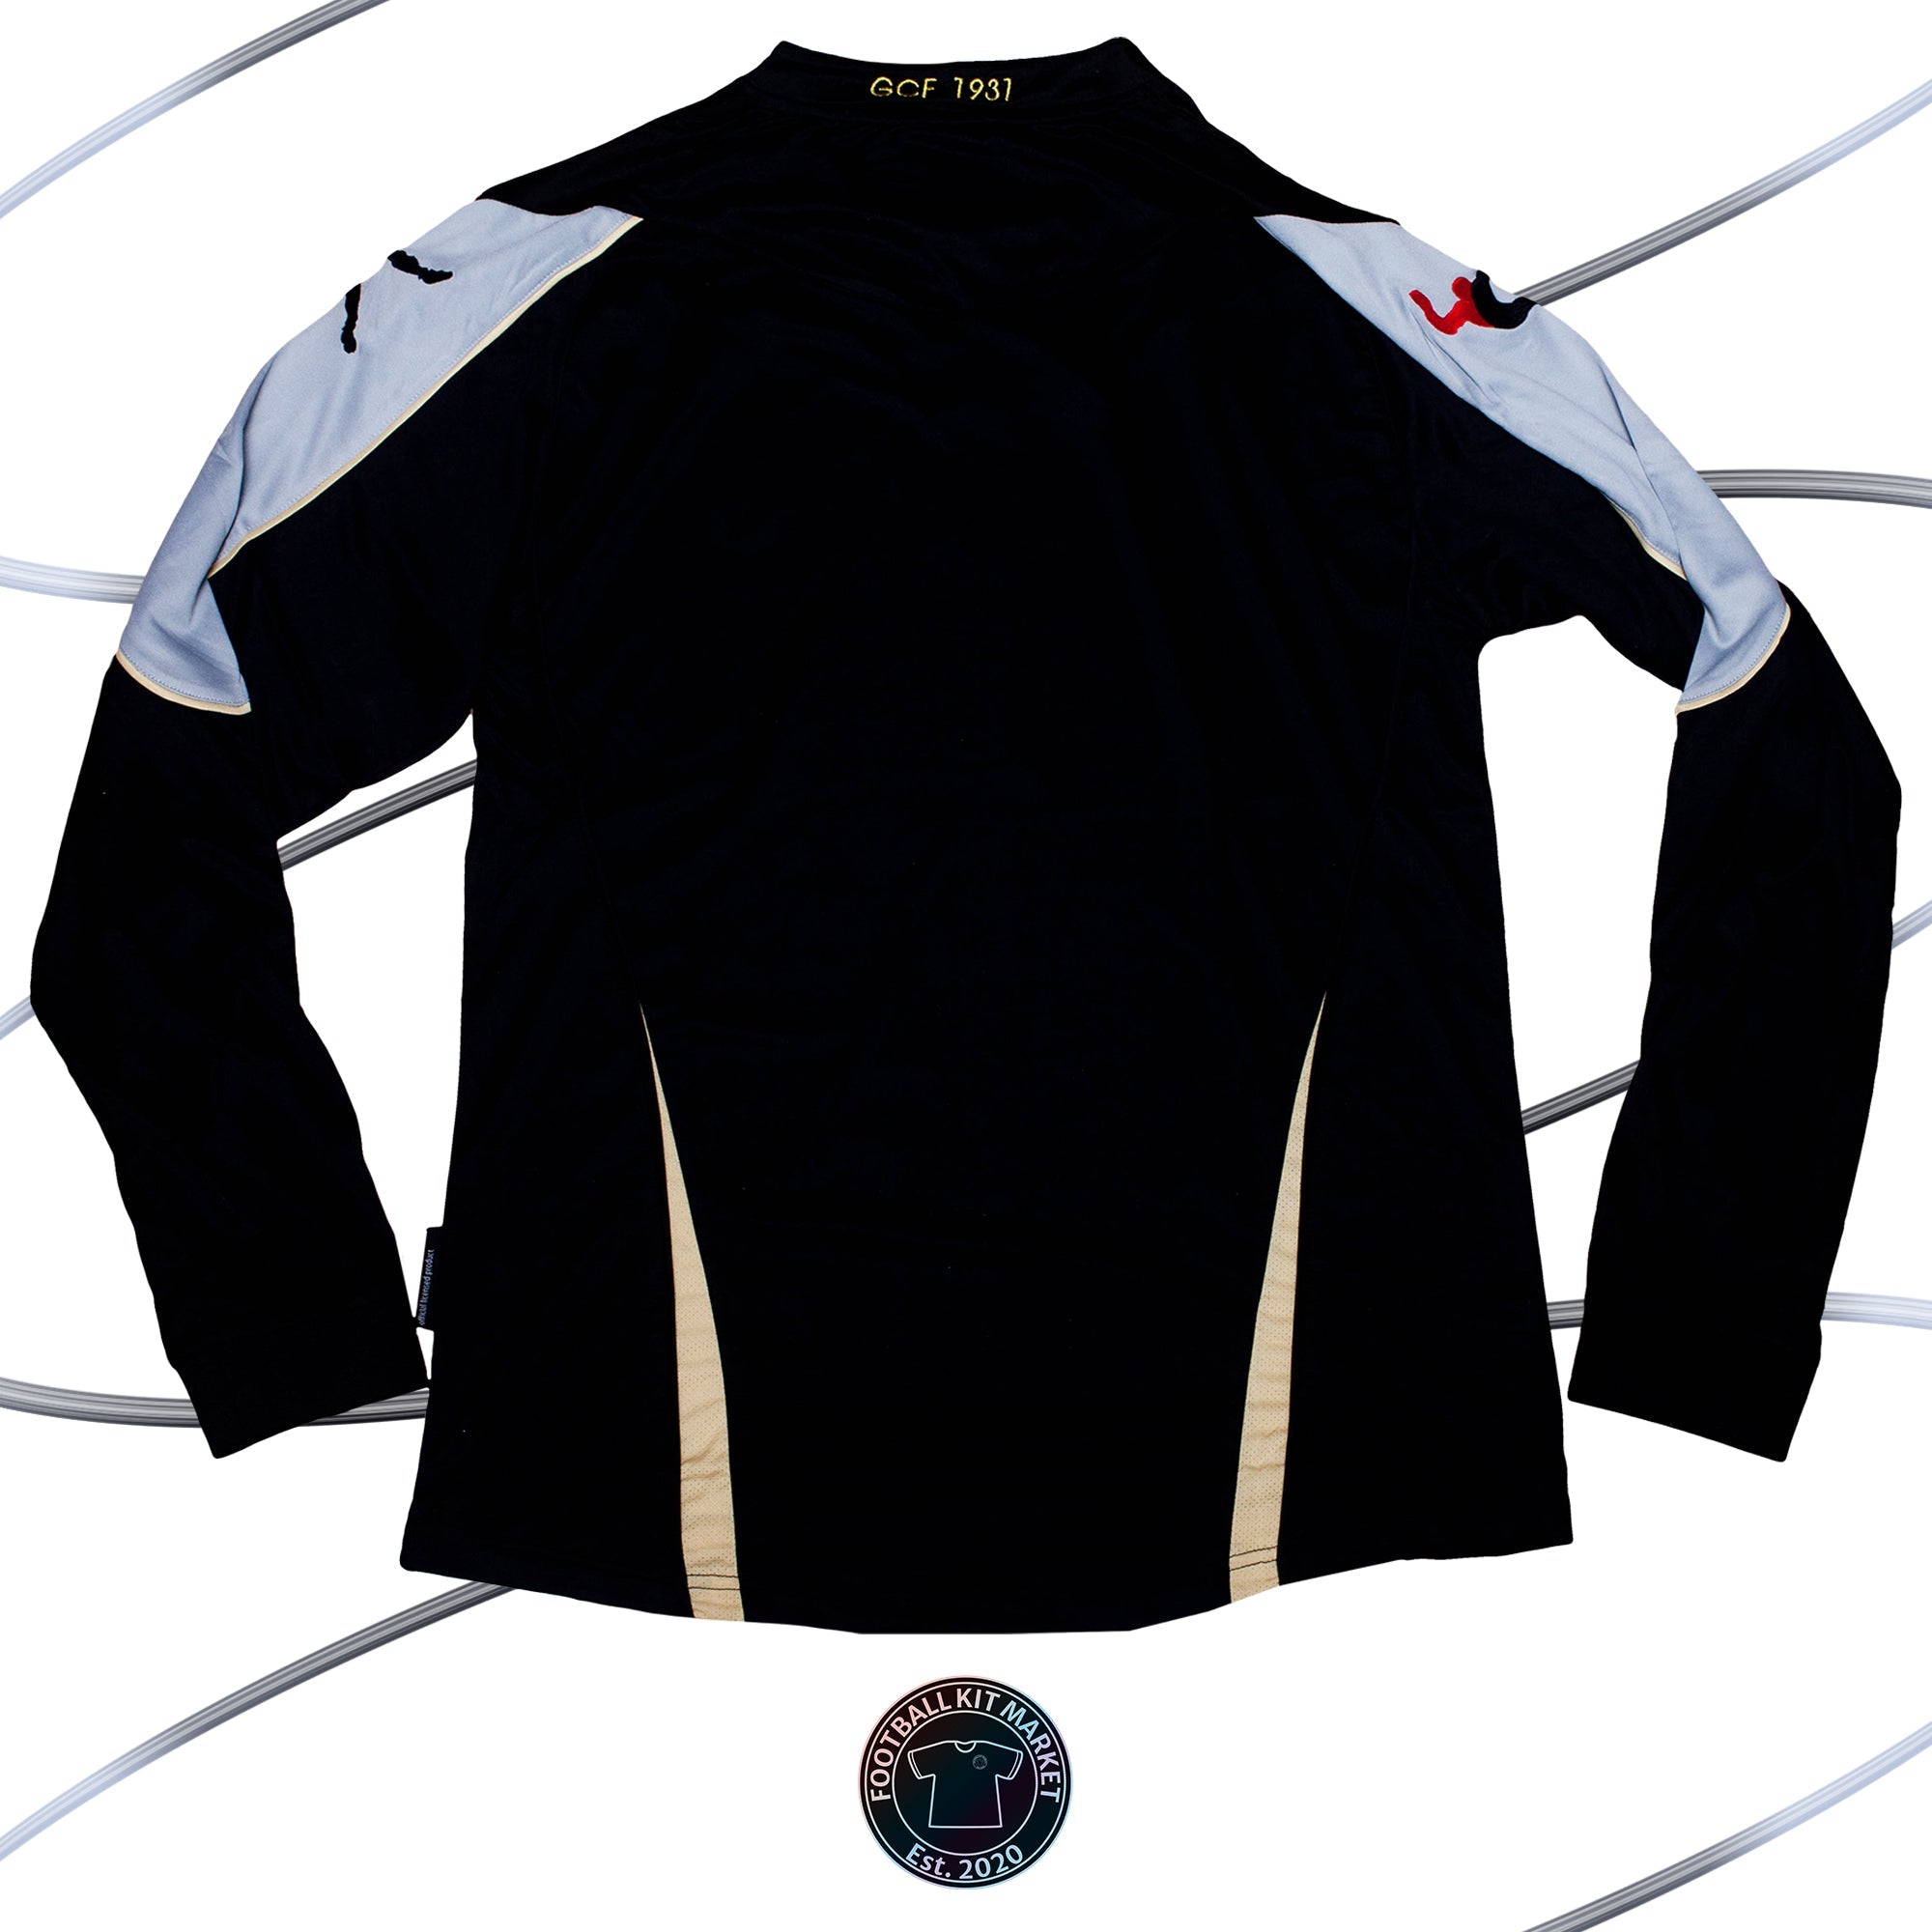 Genuine GRANADA Away Shirt (2012-2013) - LEGEA (L) - Product Image from Football Kit Market